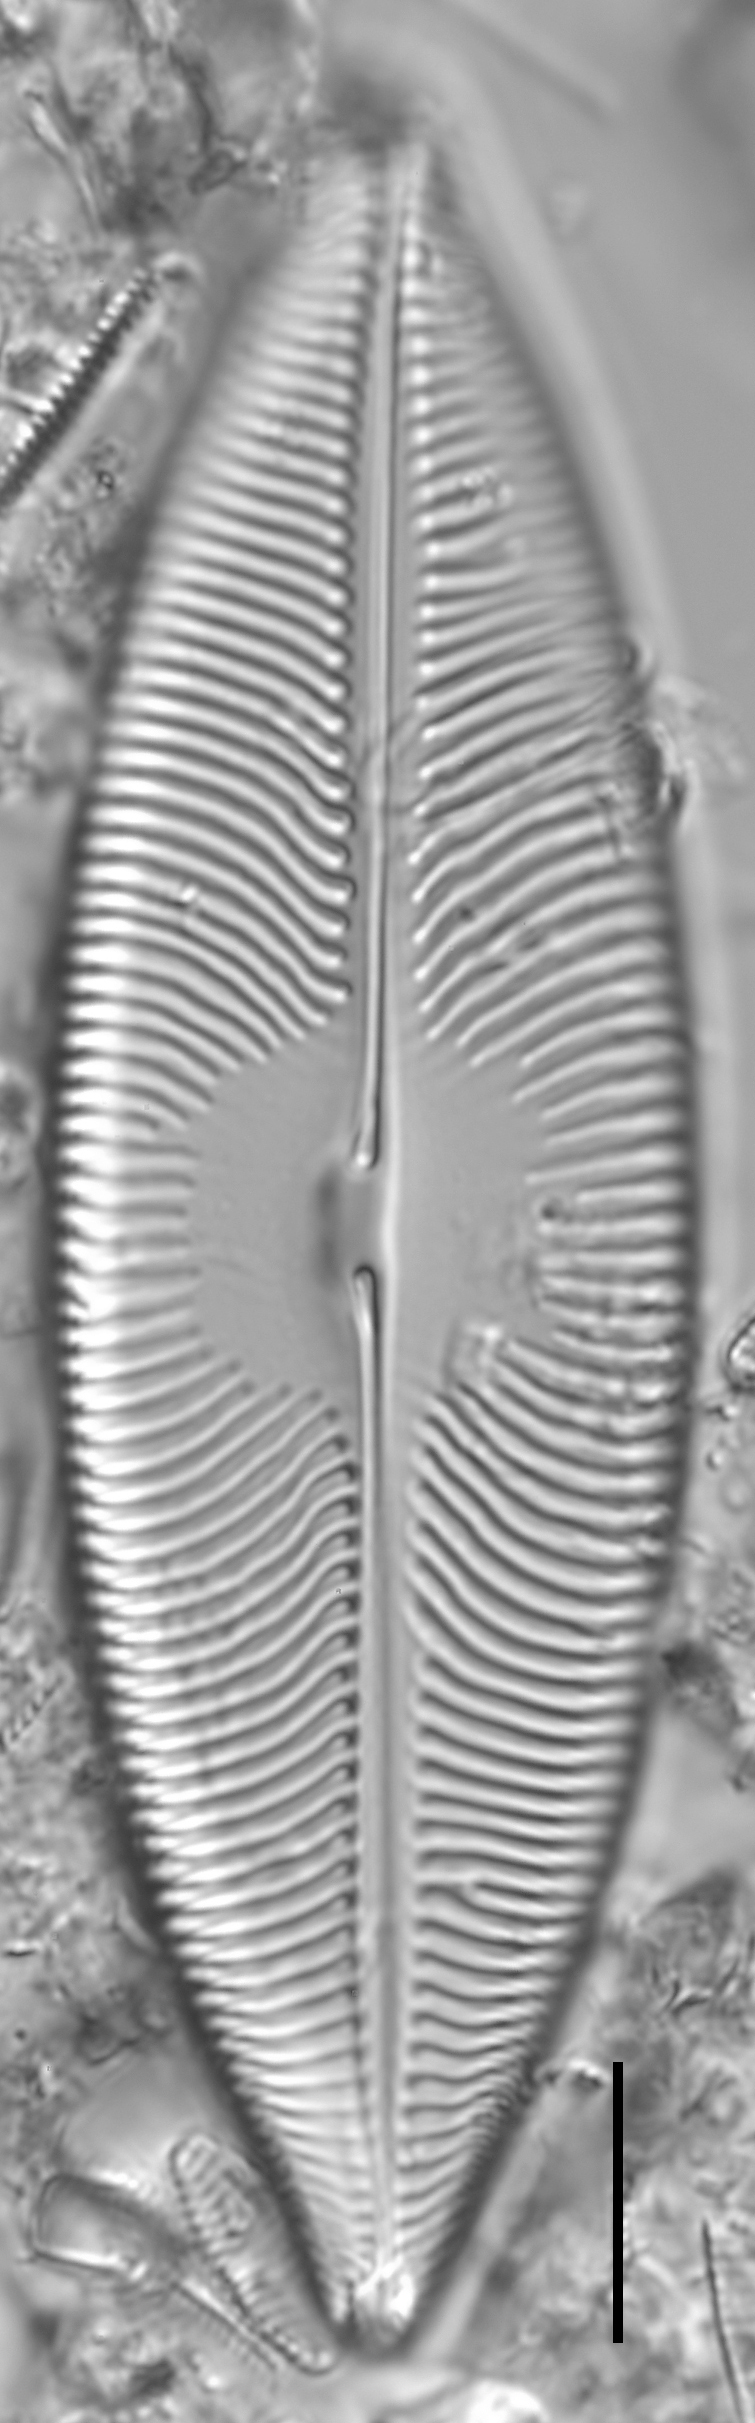 Pinnunavis elegans LM4